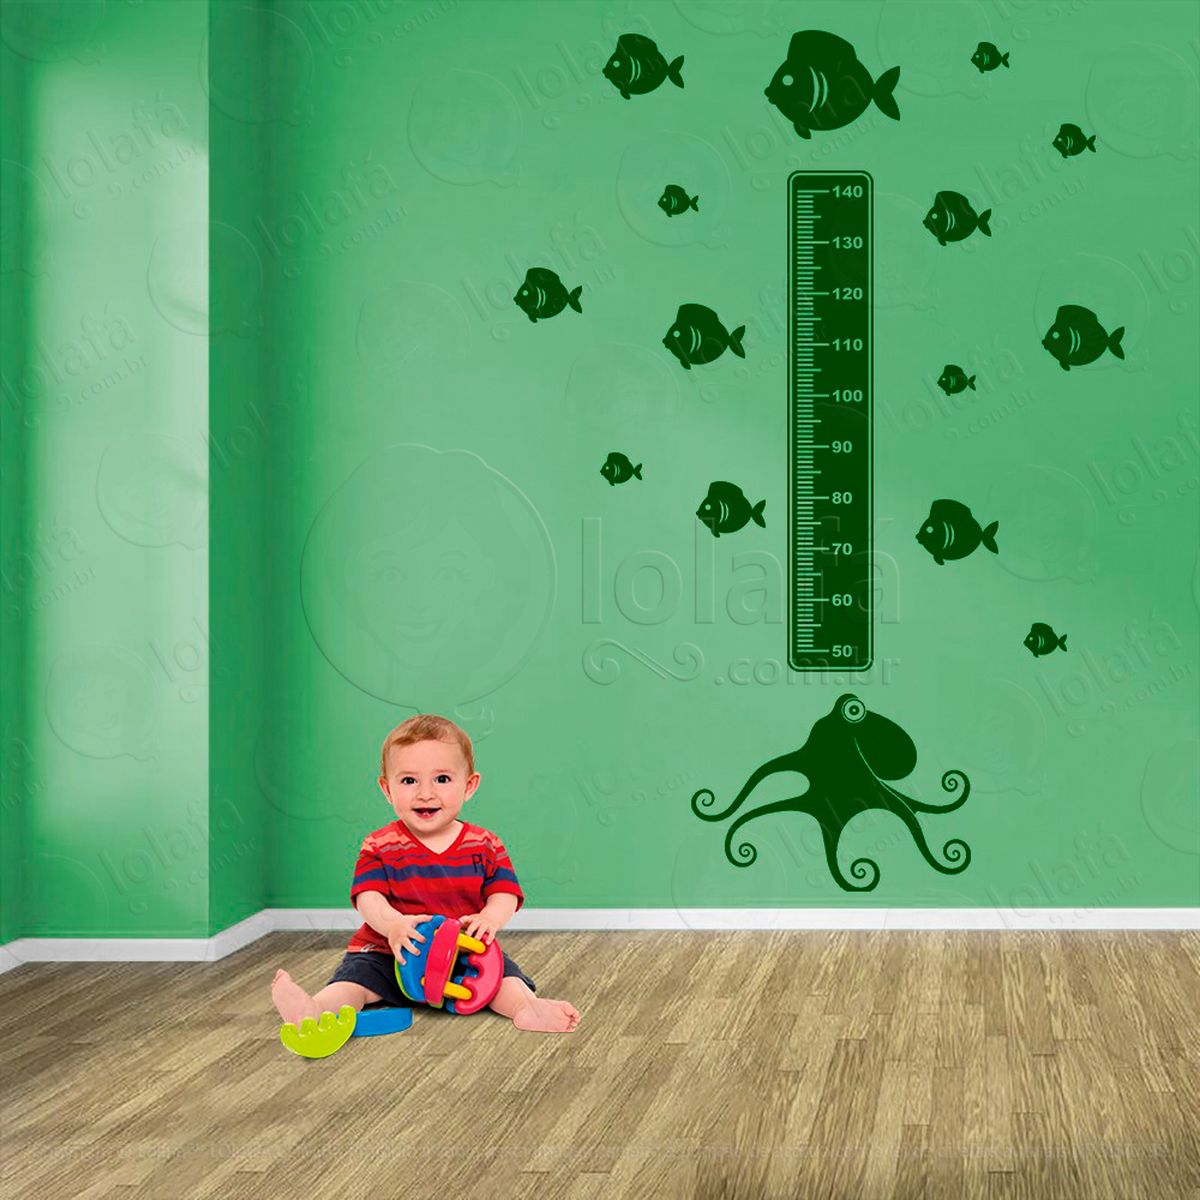 polvo e peixes adesivo régua de crescimento infantil, medidor de altura para quarto, porta e parede - mod:137